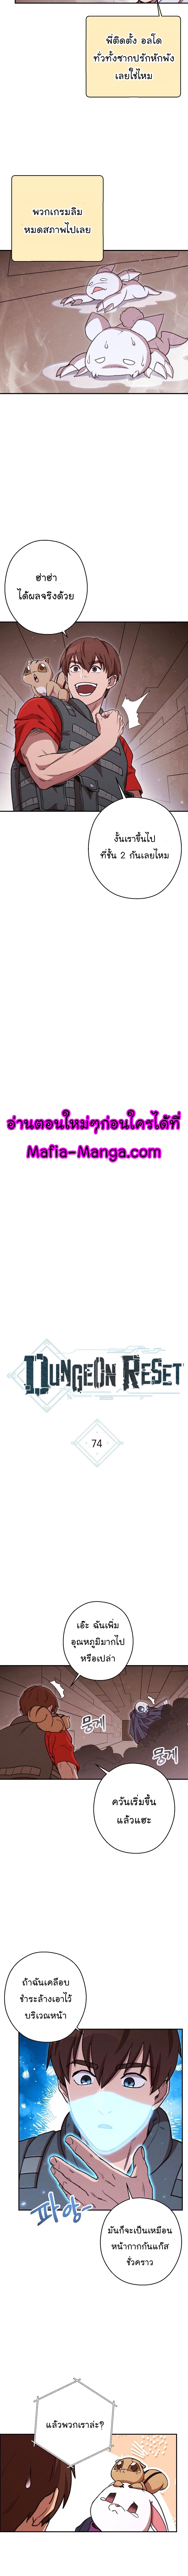 Dungeon Reset 74 02